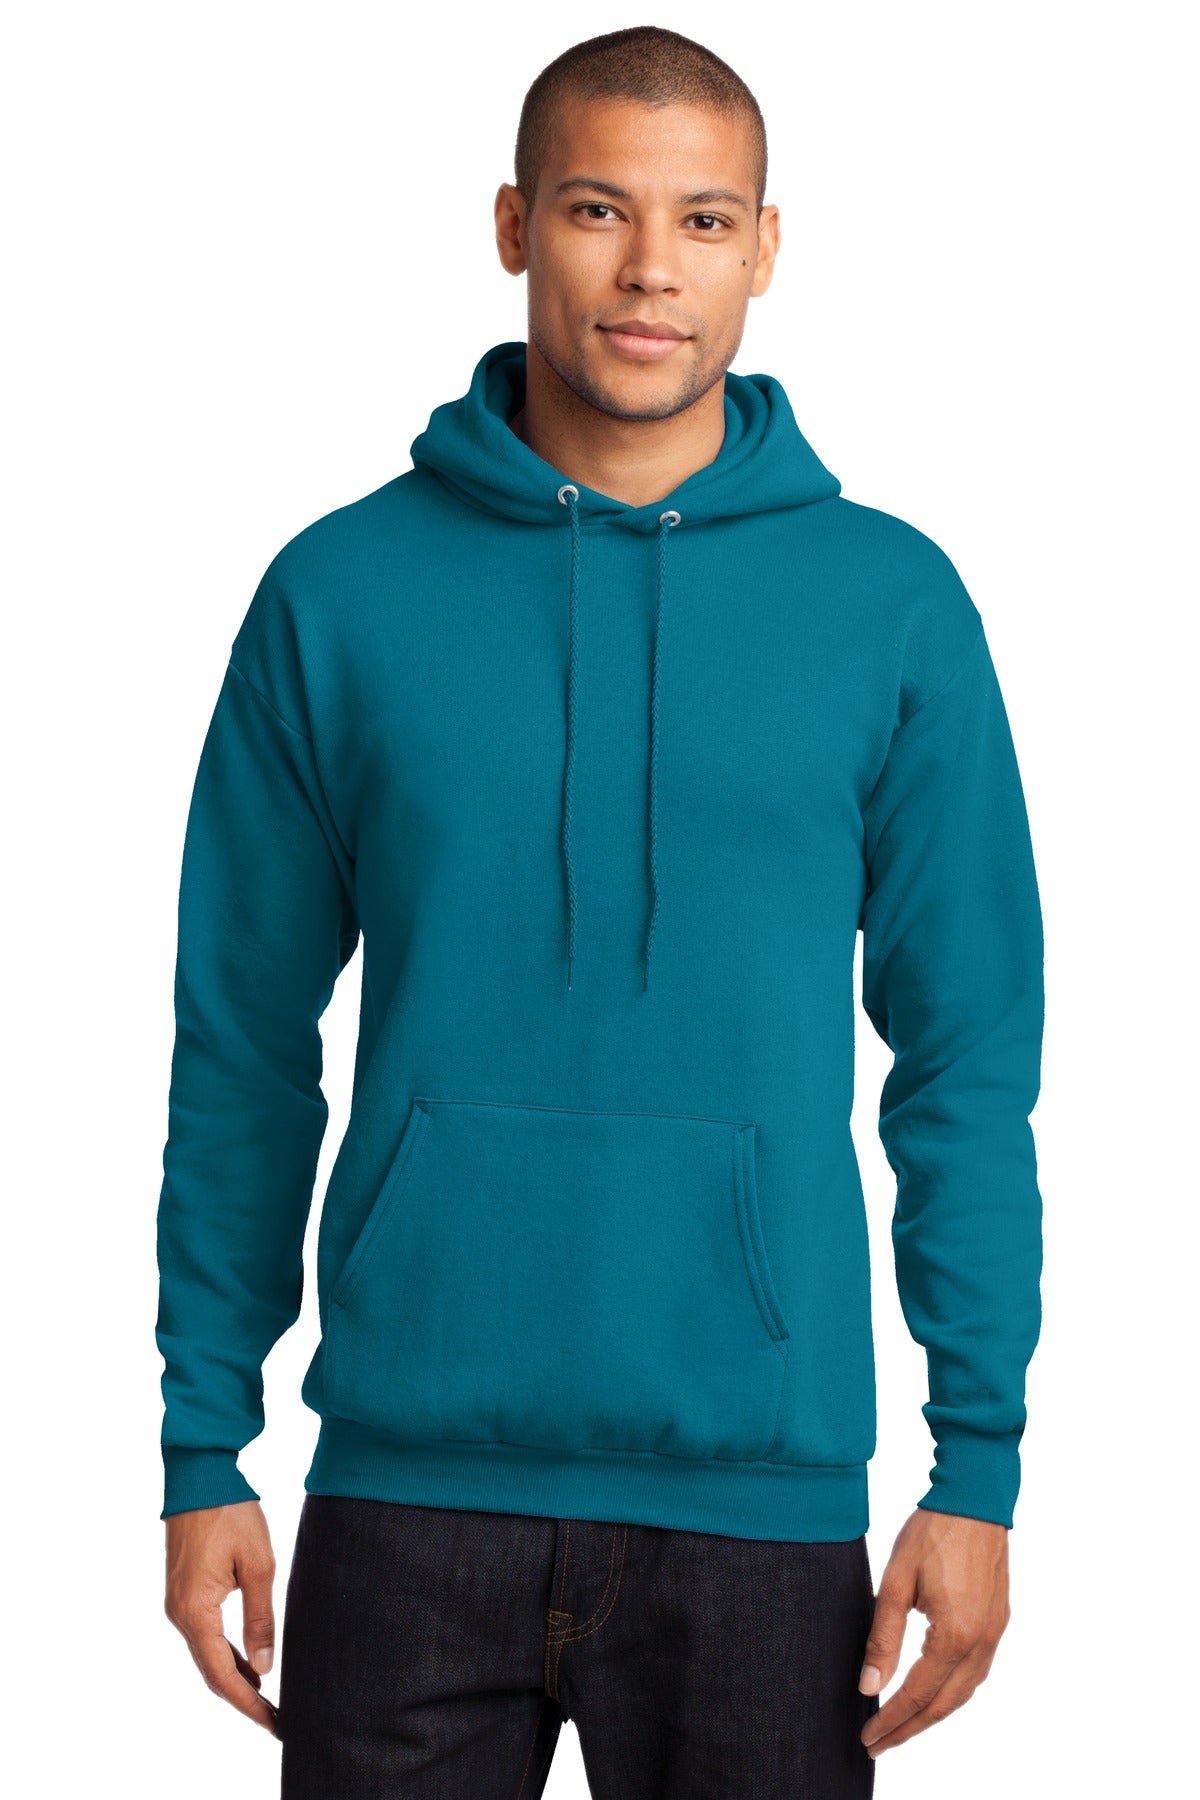 Sweatshirts/Fleece Teal Port & Company